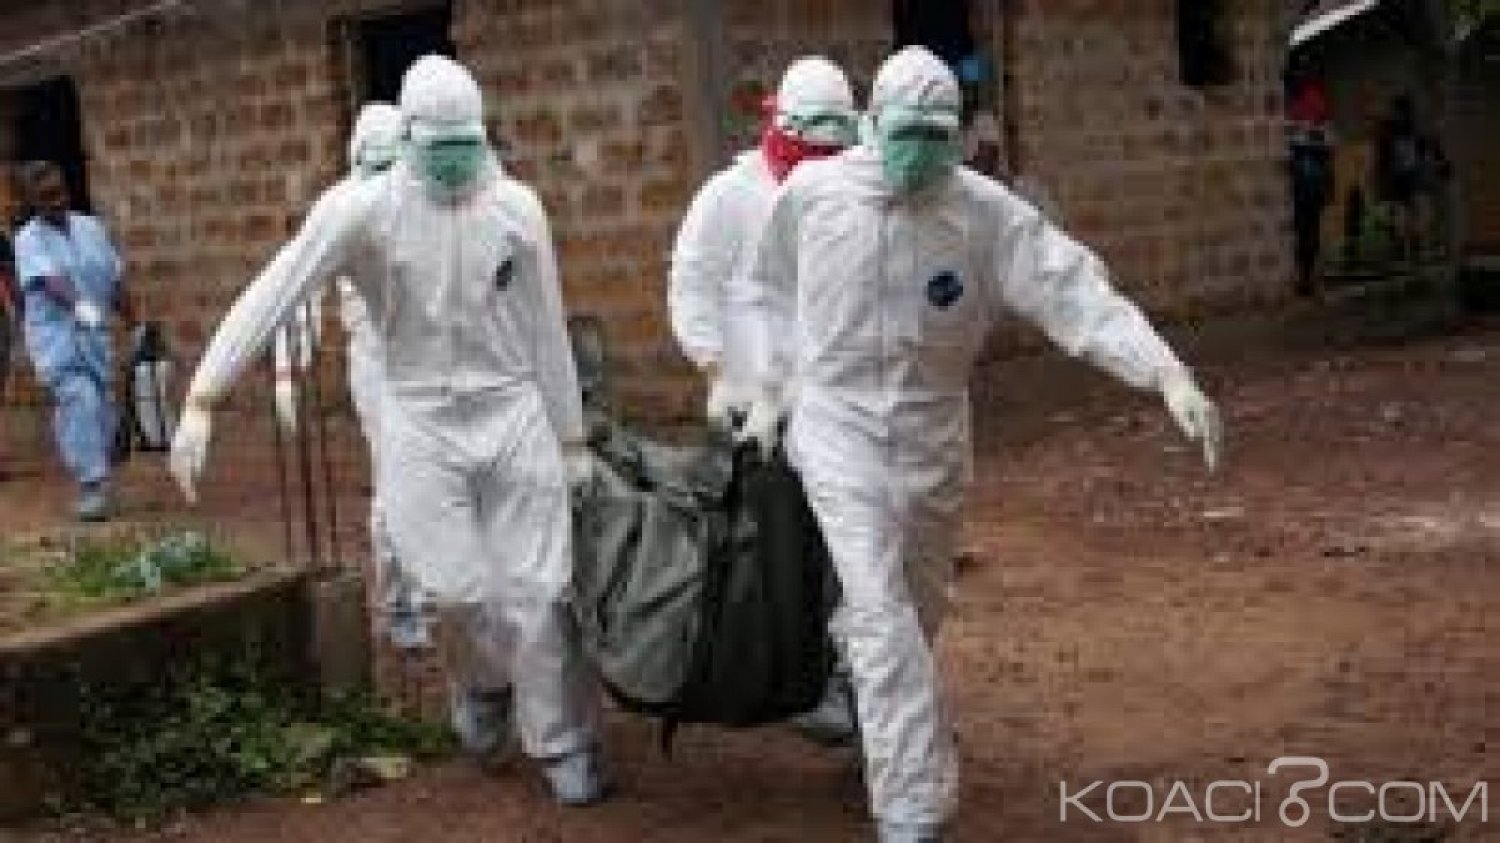 Ouganda: Premier cas confirmé d'Ebola, un enfant de cinq ans contaminé